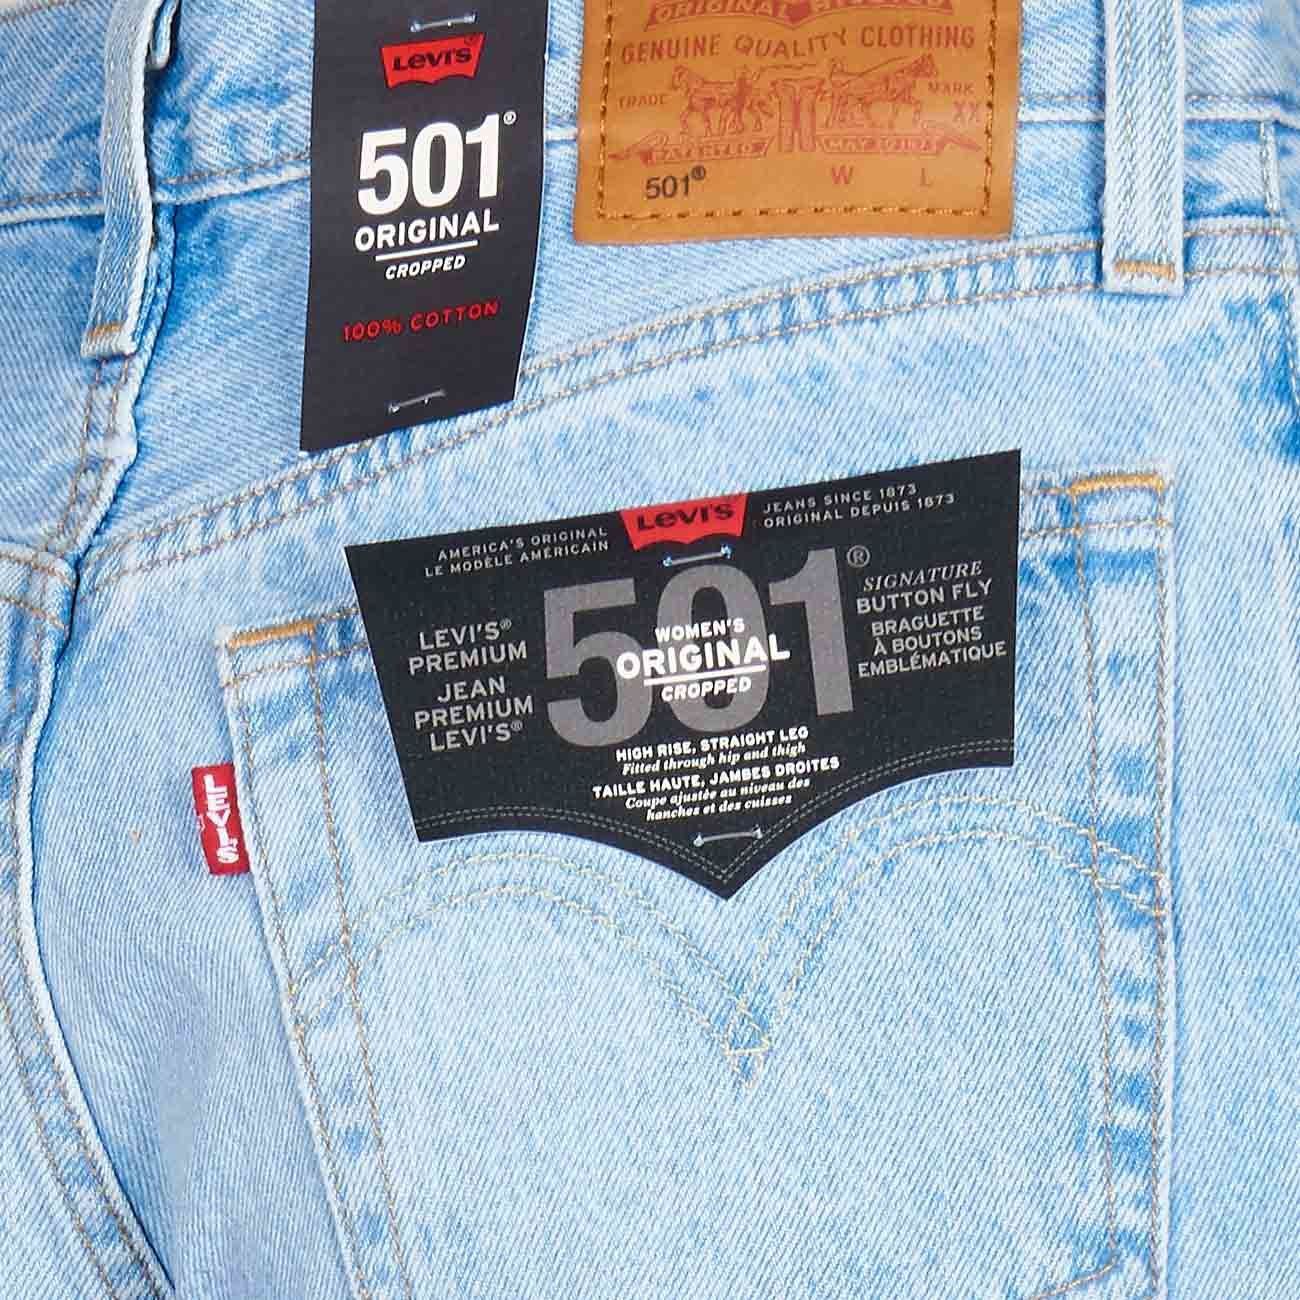 501 Original Cropped Jeans